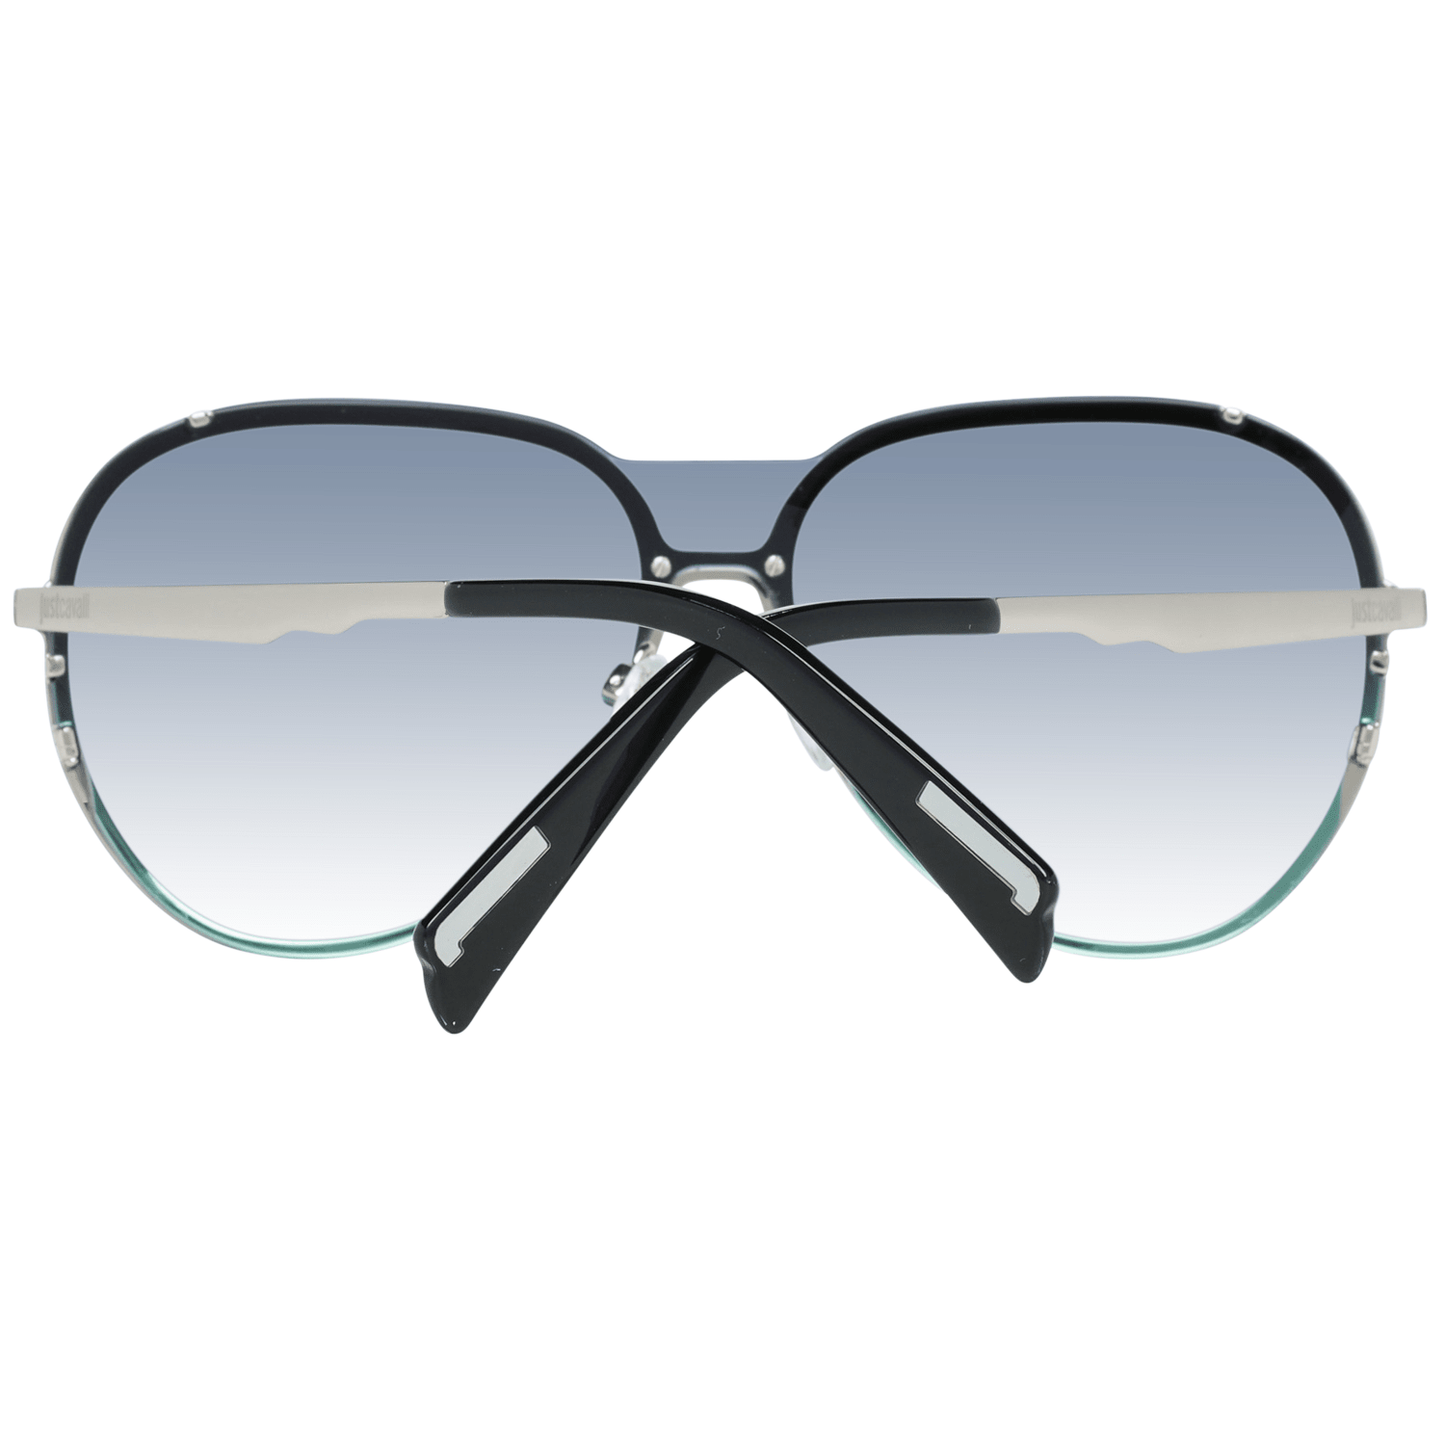 Silver Unisex Sunglasses